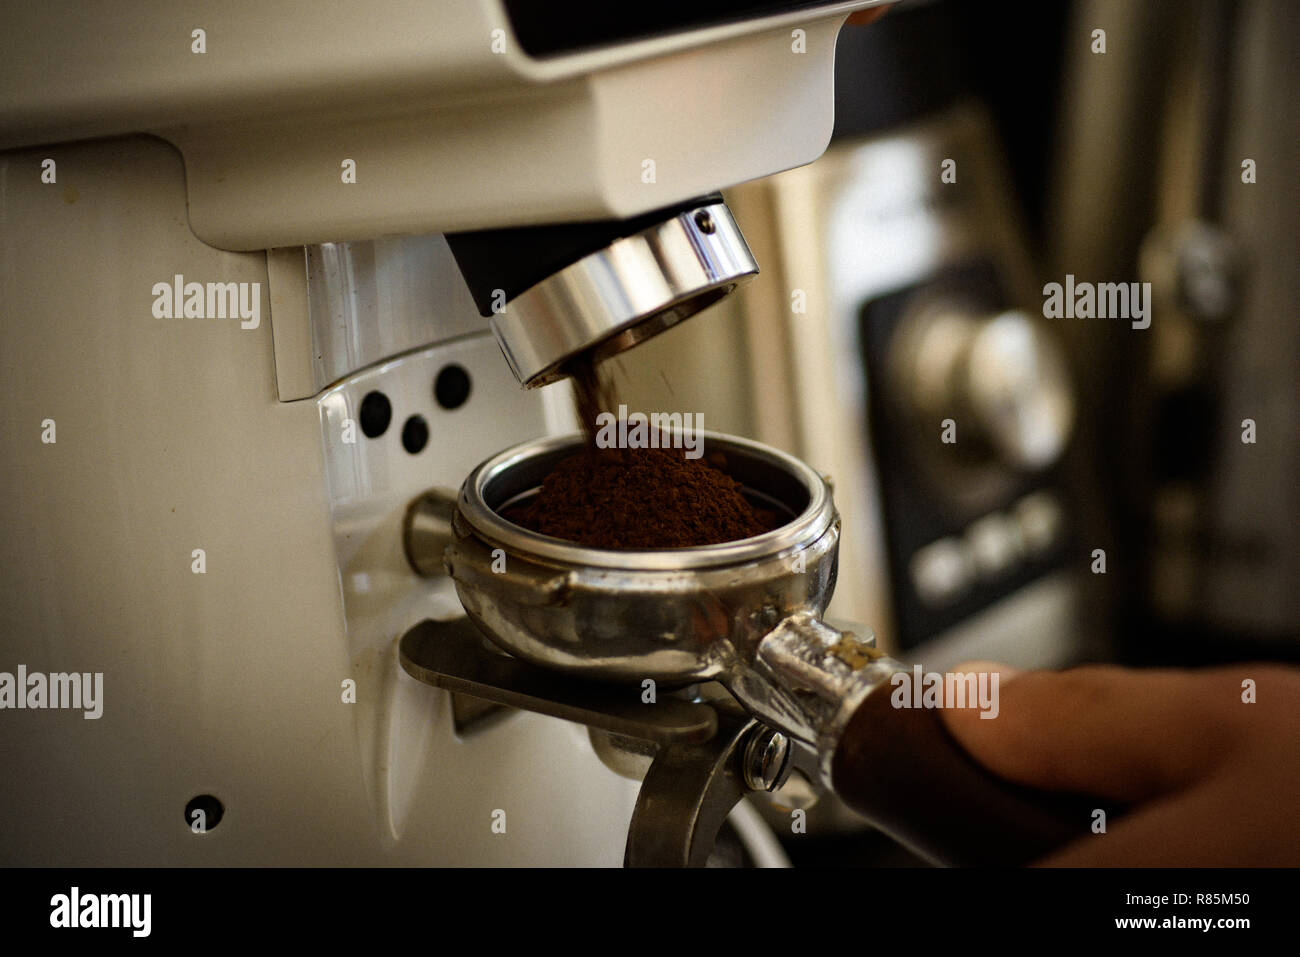 https://c8.alamy.com/comp/R85M50/professional-grinding-mechanism-barista-grind-coffee-beans-using-coffee-machine-coffee-grinder-grinding-roasted-beans-into-powder-fresh-ground-coffee-in-portafilter-barista-makes-espresso-in-cafe-R85M50.jpg